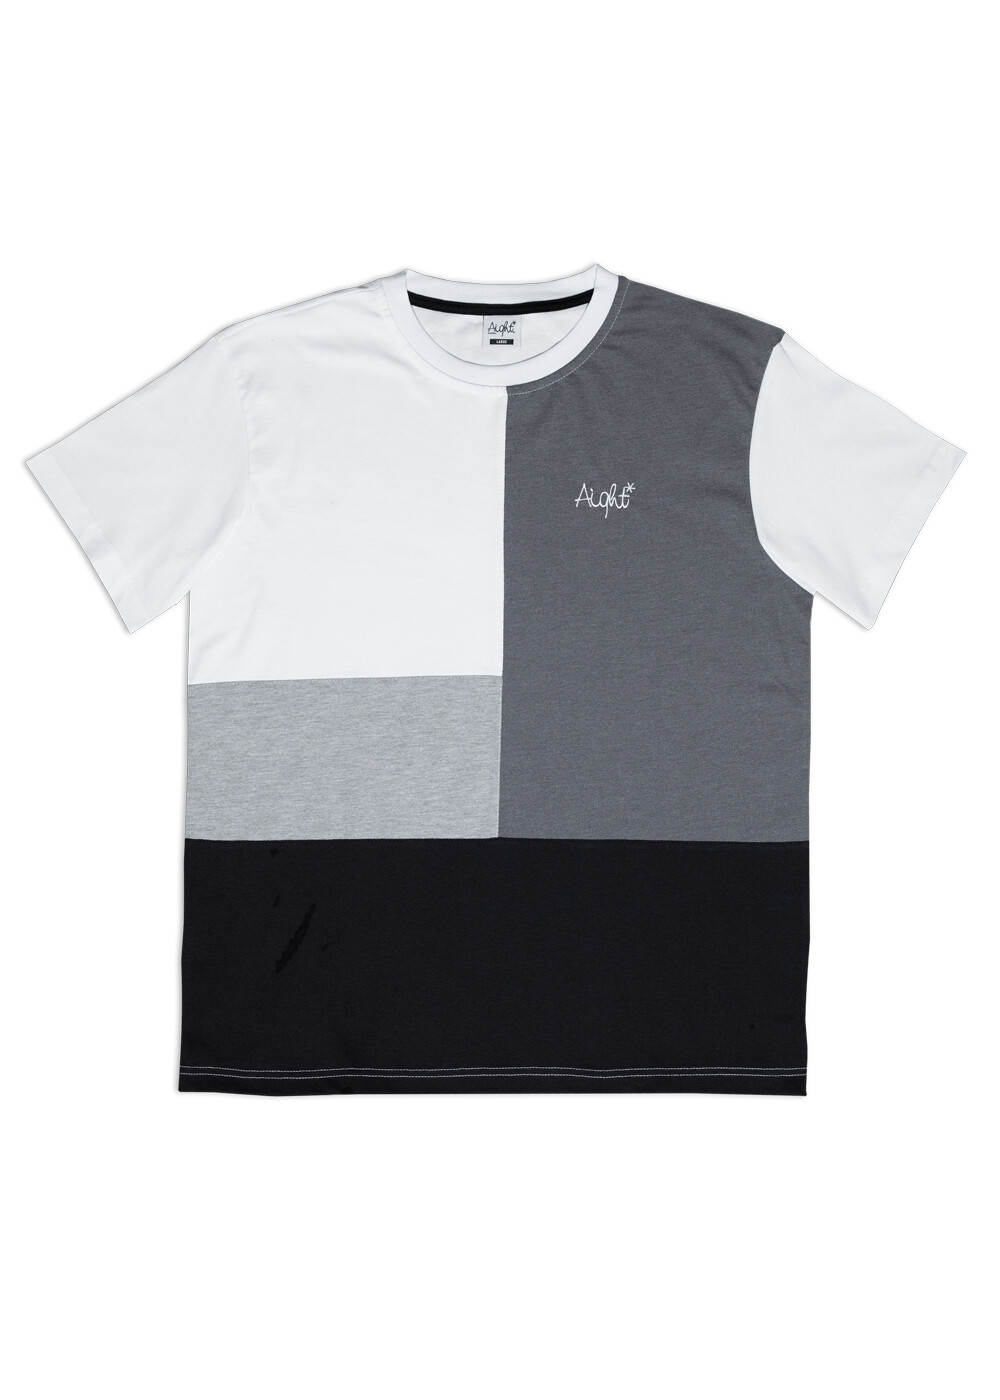 Aight* T-Shirt - "Grey Block" grey white